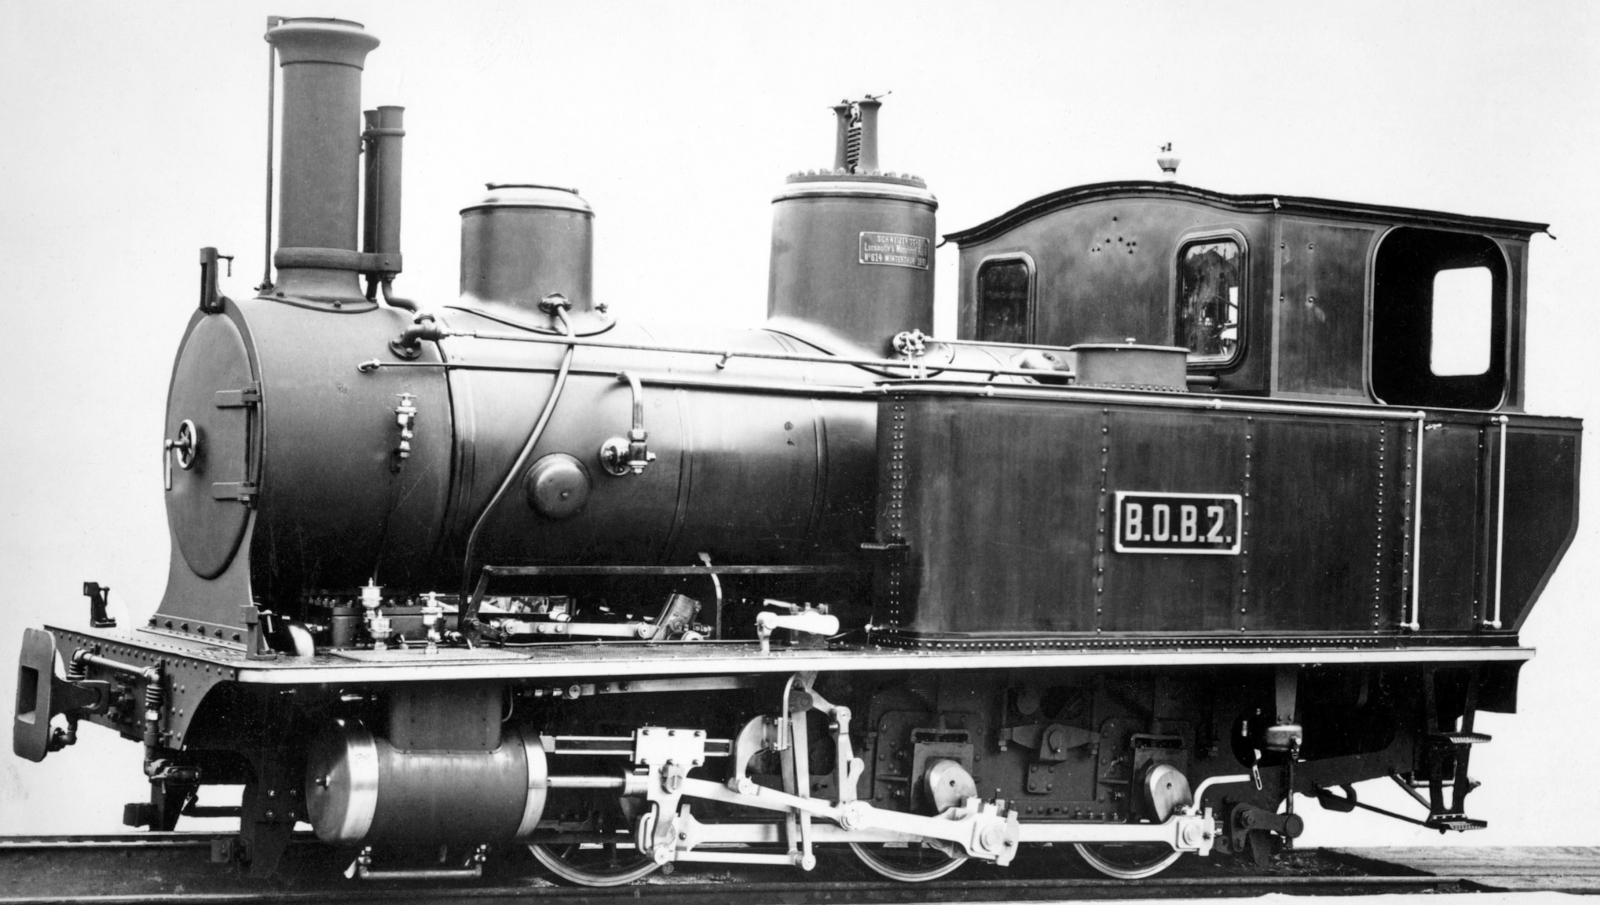 No. 2 around 1890